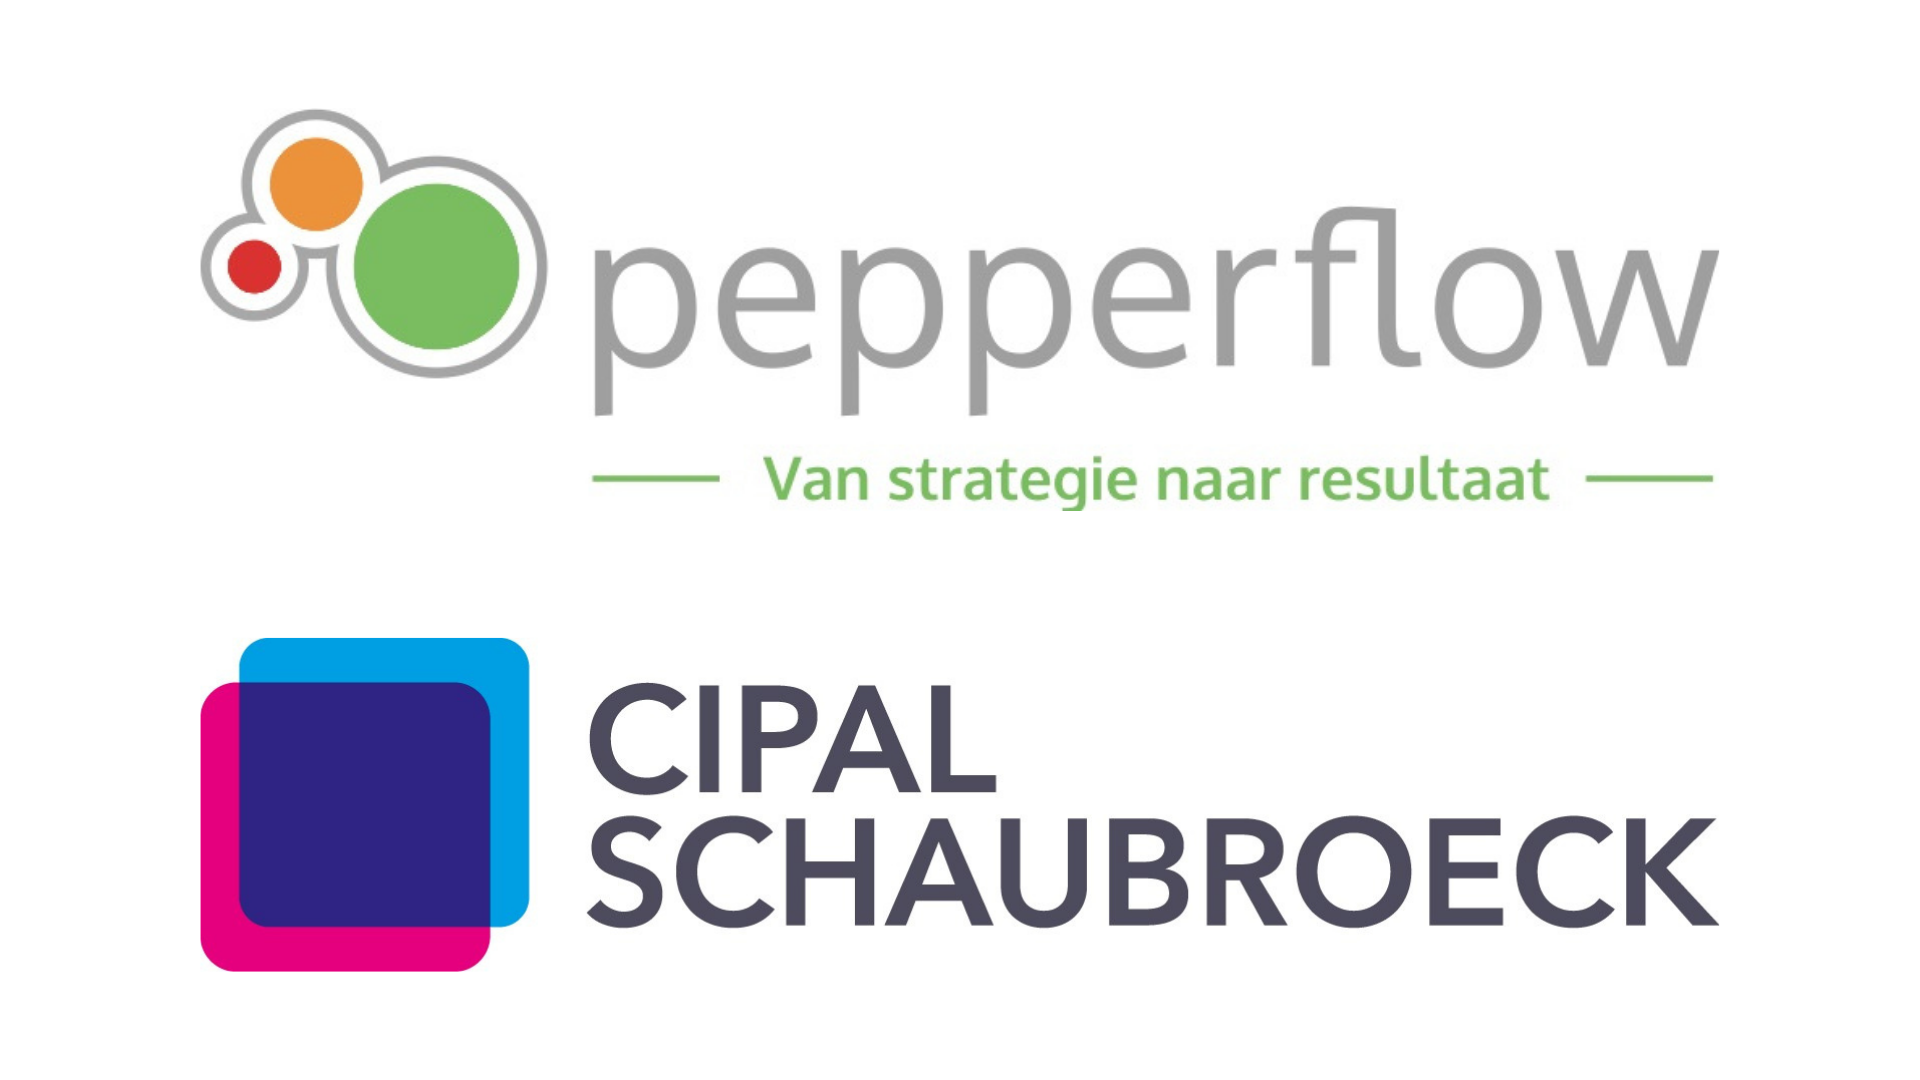 Pepperflow en Cipal Schaubroeck gaan samenwerking aan 